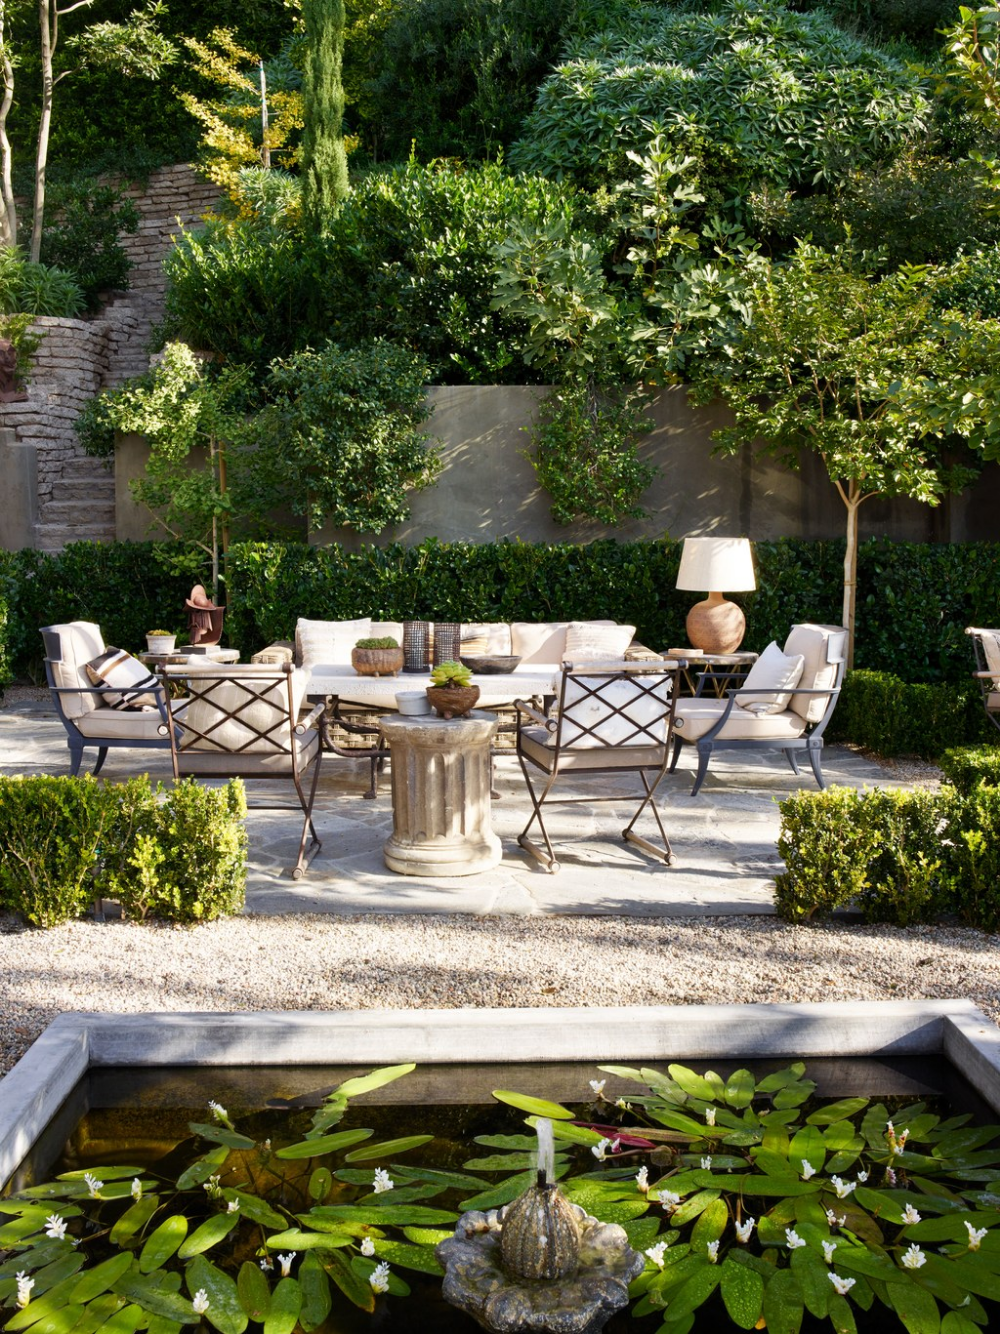 AD100 Designer Jean-Louis Deniot Reveals His Historic Los Angeles Abode -   15 garden design Roof spaces ideas